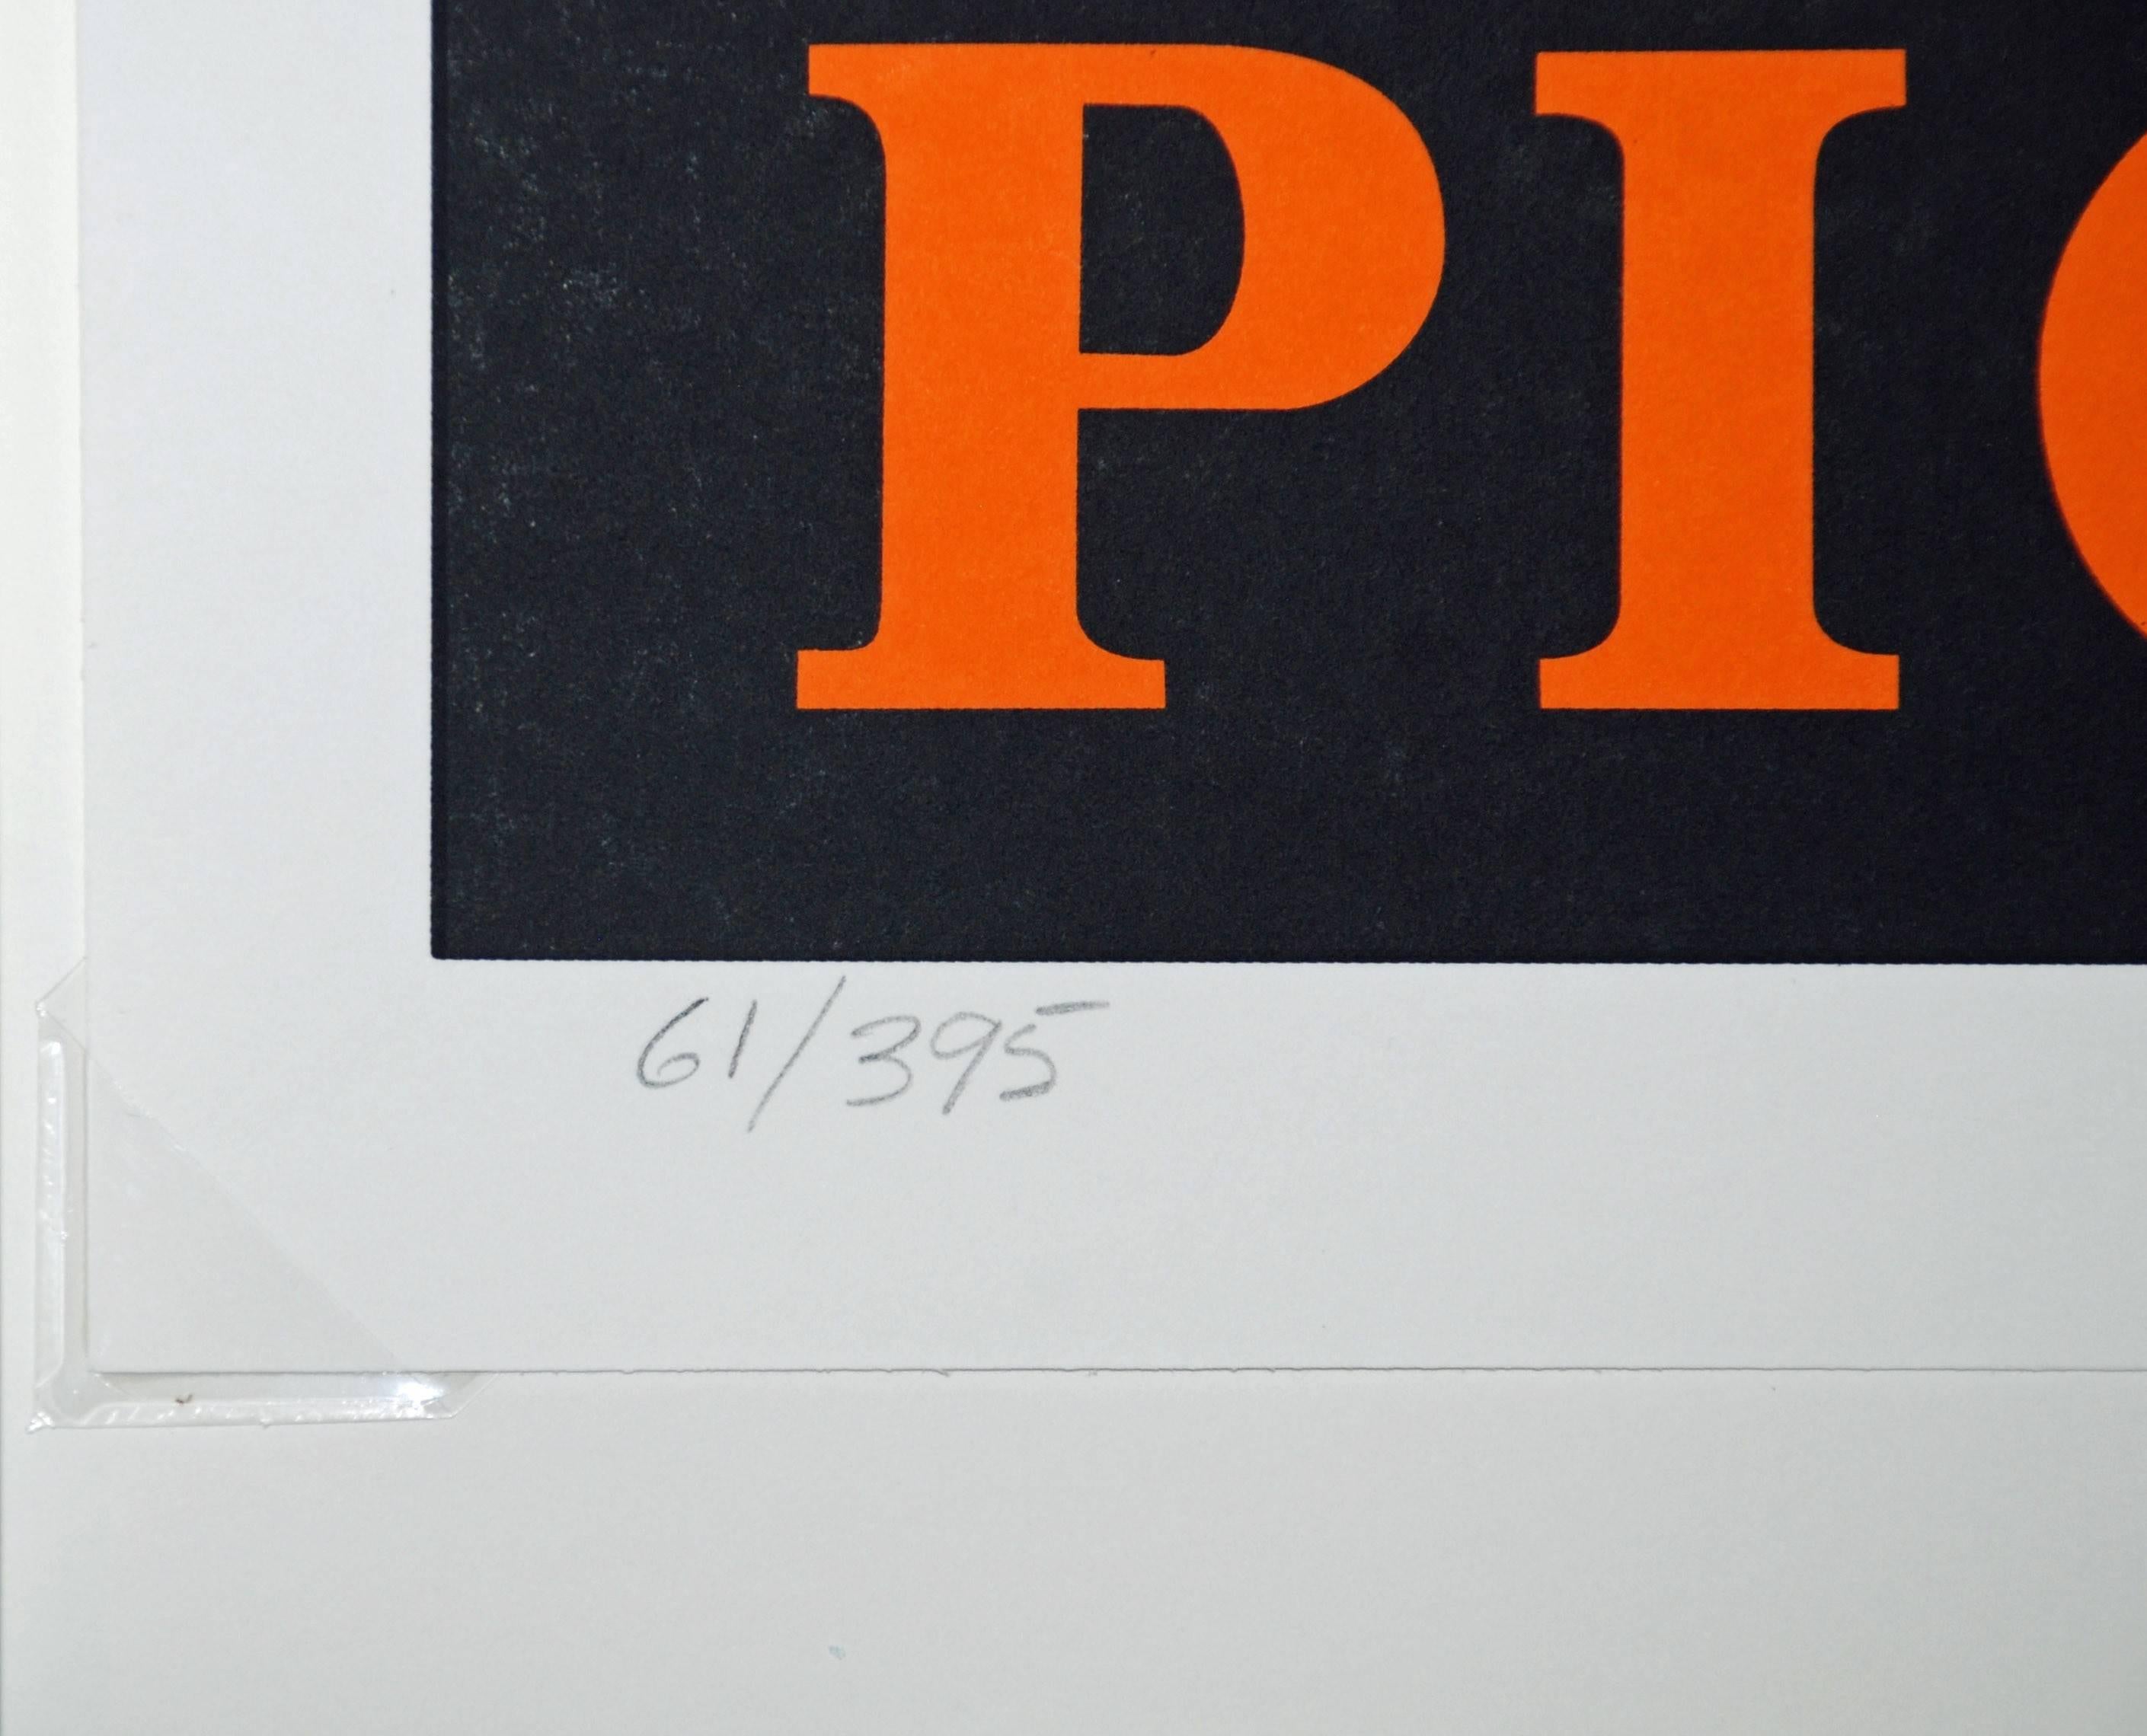 Artist: Robert Indiana
Medium: Original serigraph
Title: Picasso
Portfolio: The American Dream
Year: 1997
Edition: 61/395
Framed Size: 26 3/8